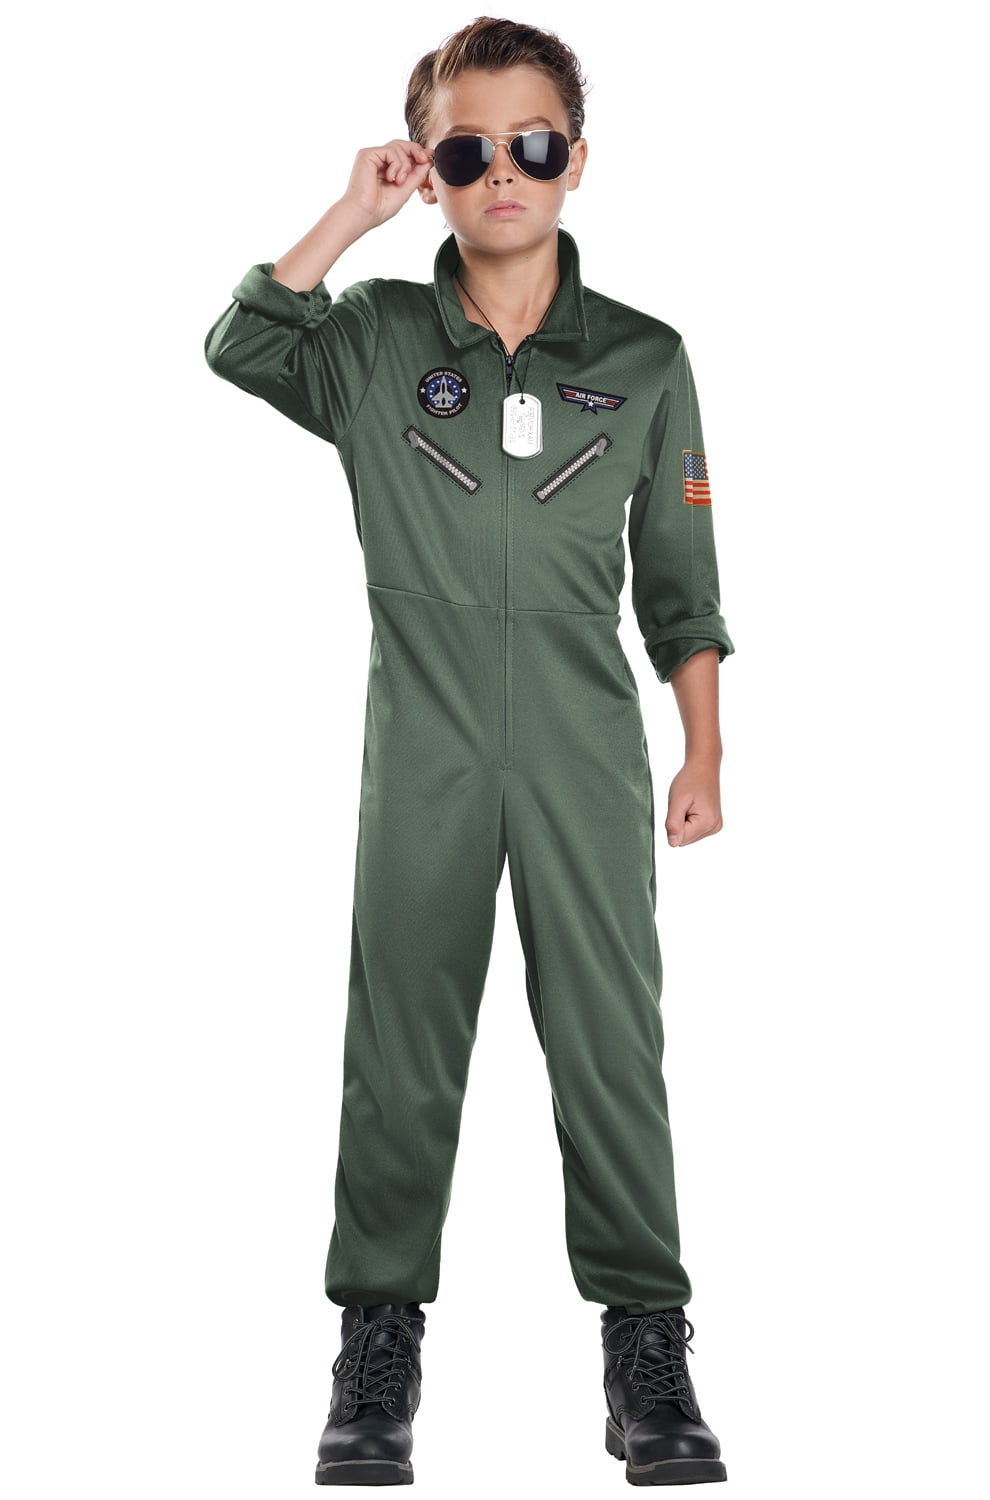 New Star Wars AT-AT Driver Gray Jumpsuit Costume Pilot Flightsuit Uniform